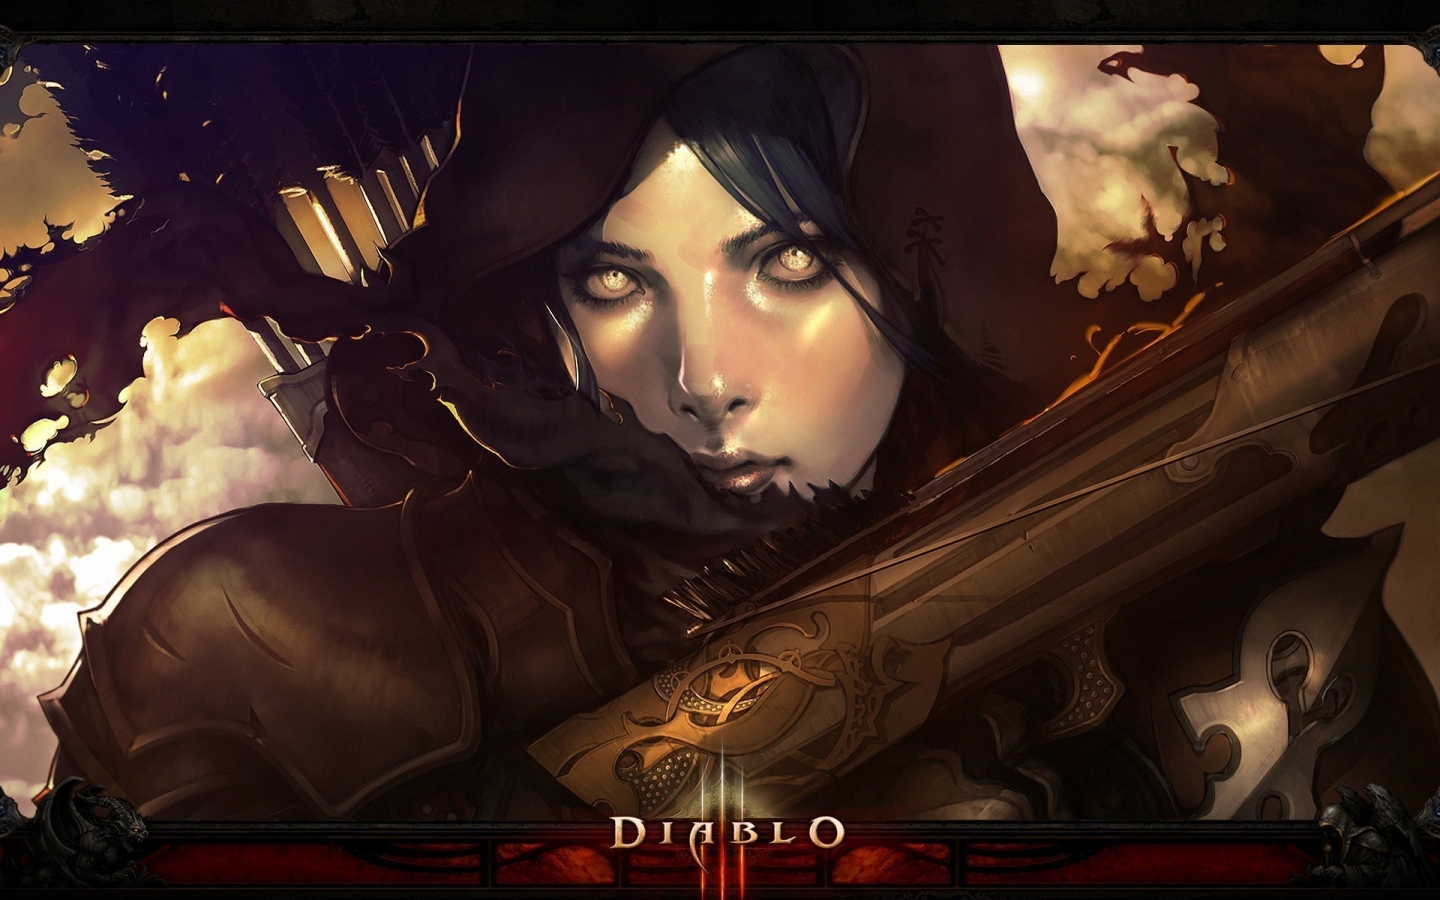 Diablo III Character for 1440 x 900 widescreen resolution